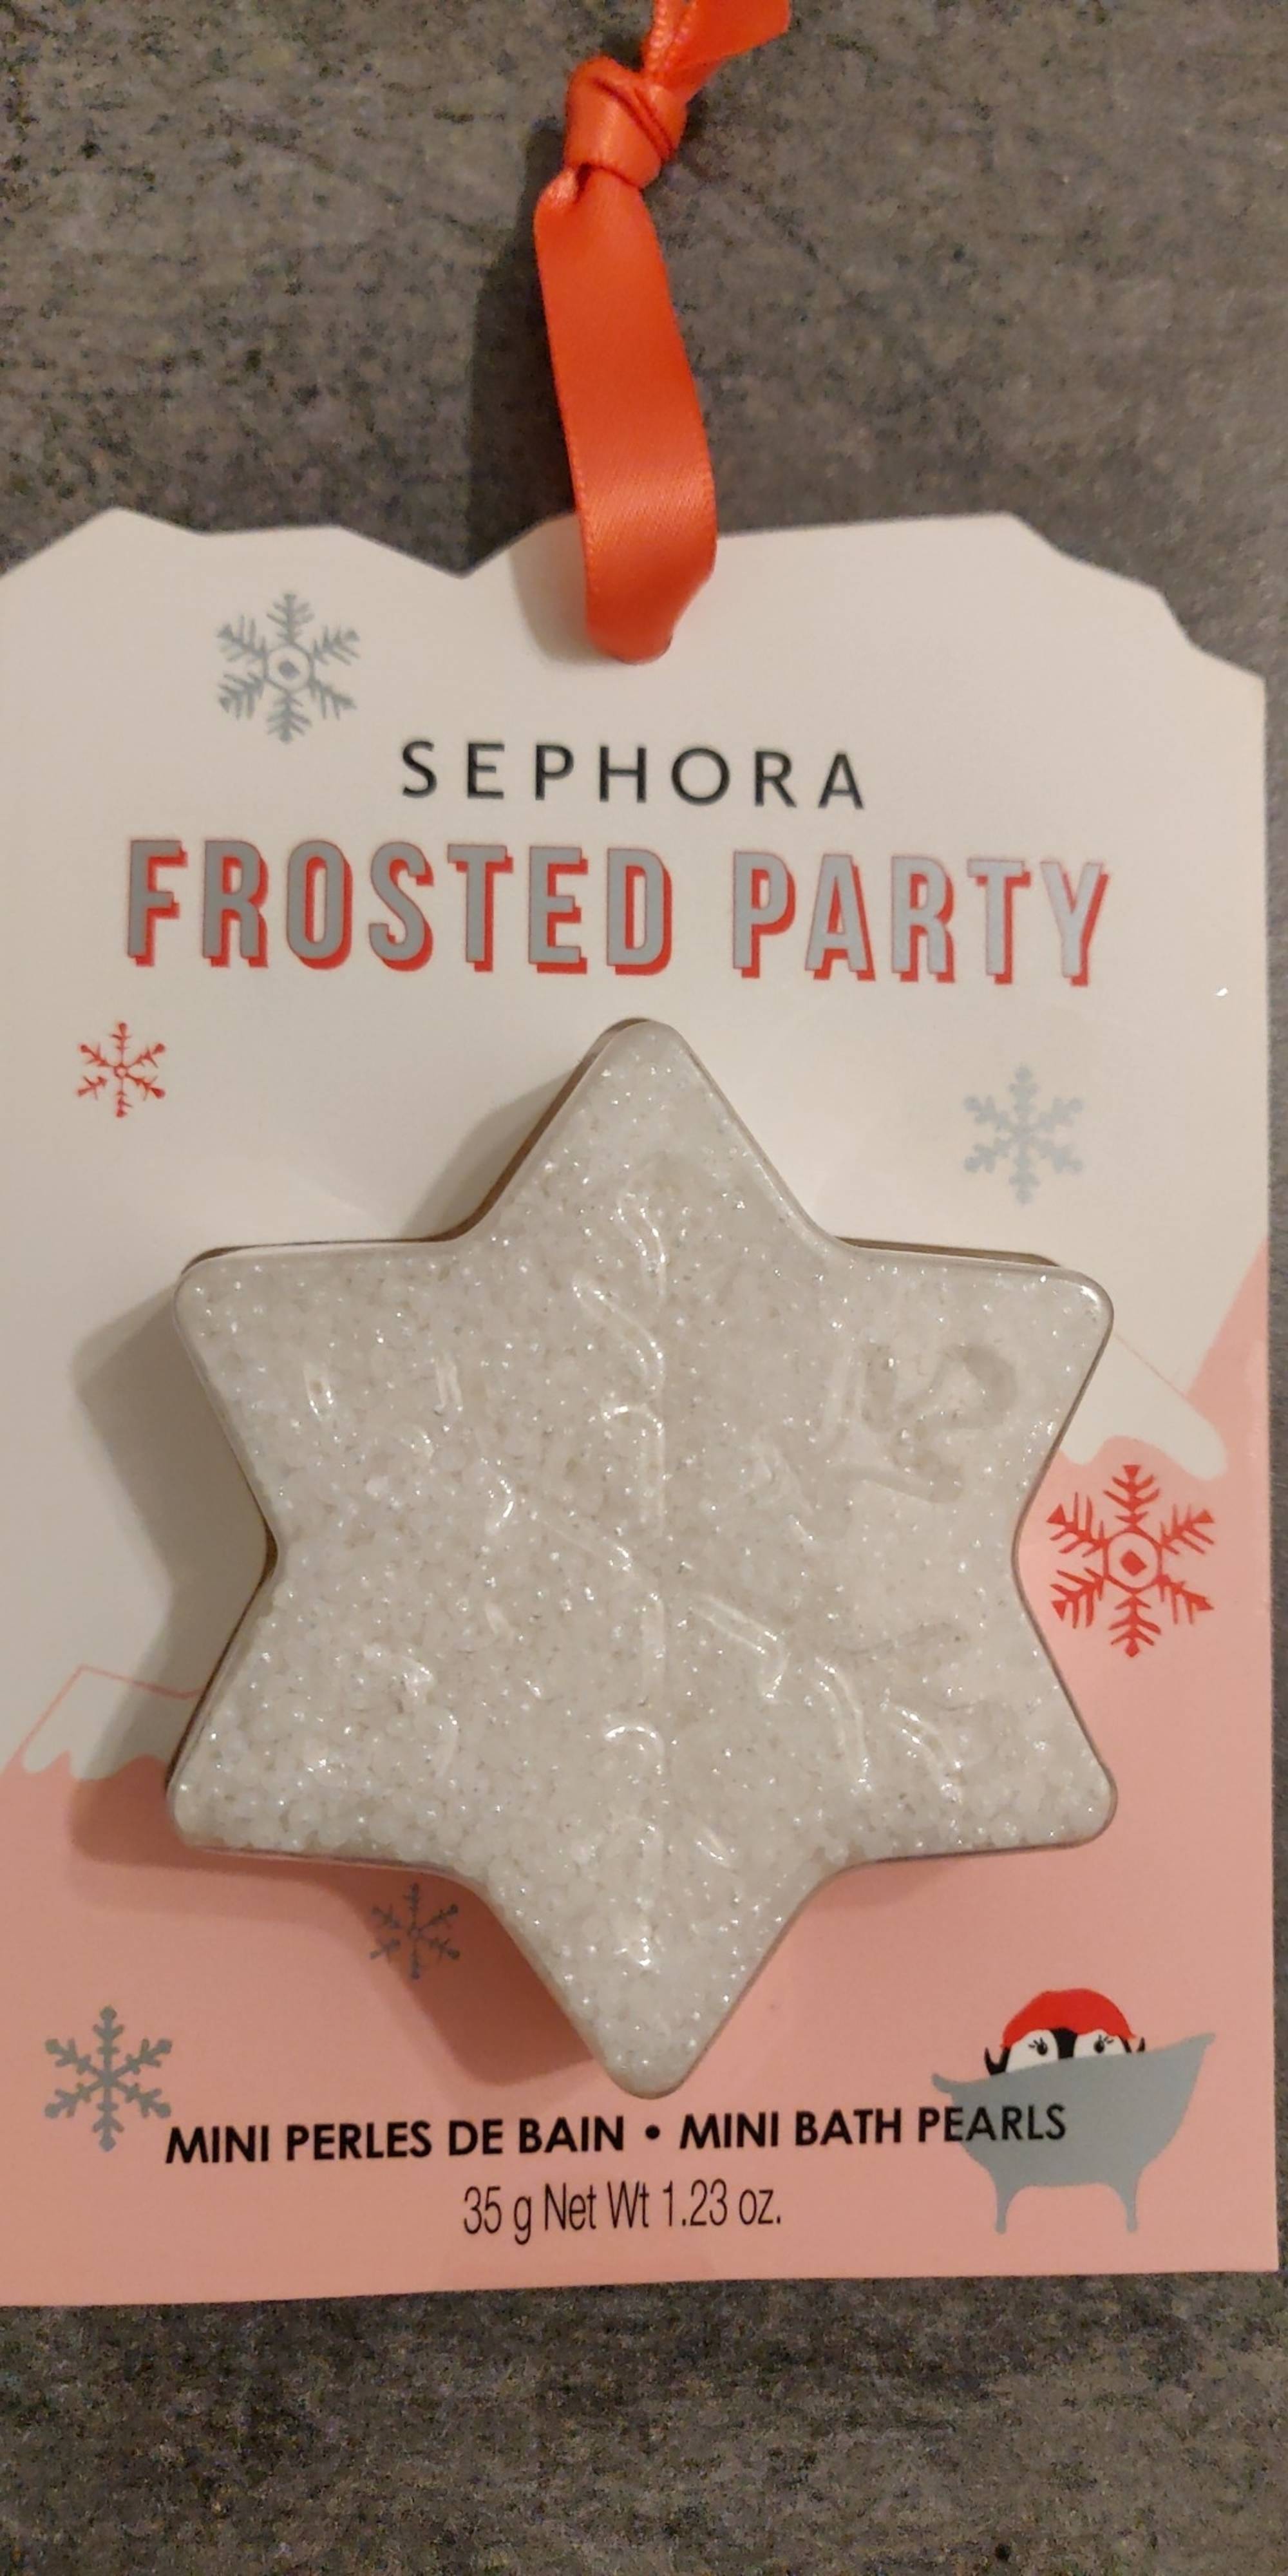 SEPHORA - Frosted party - Mini perles de bain